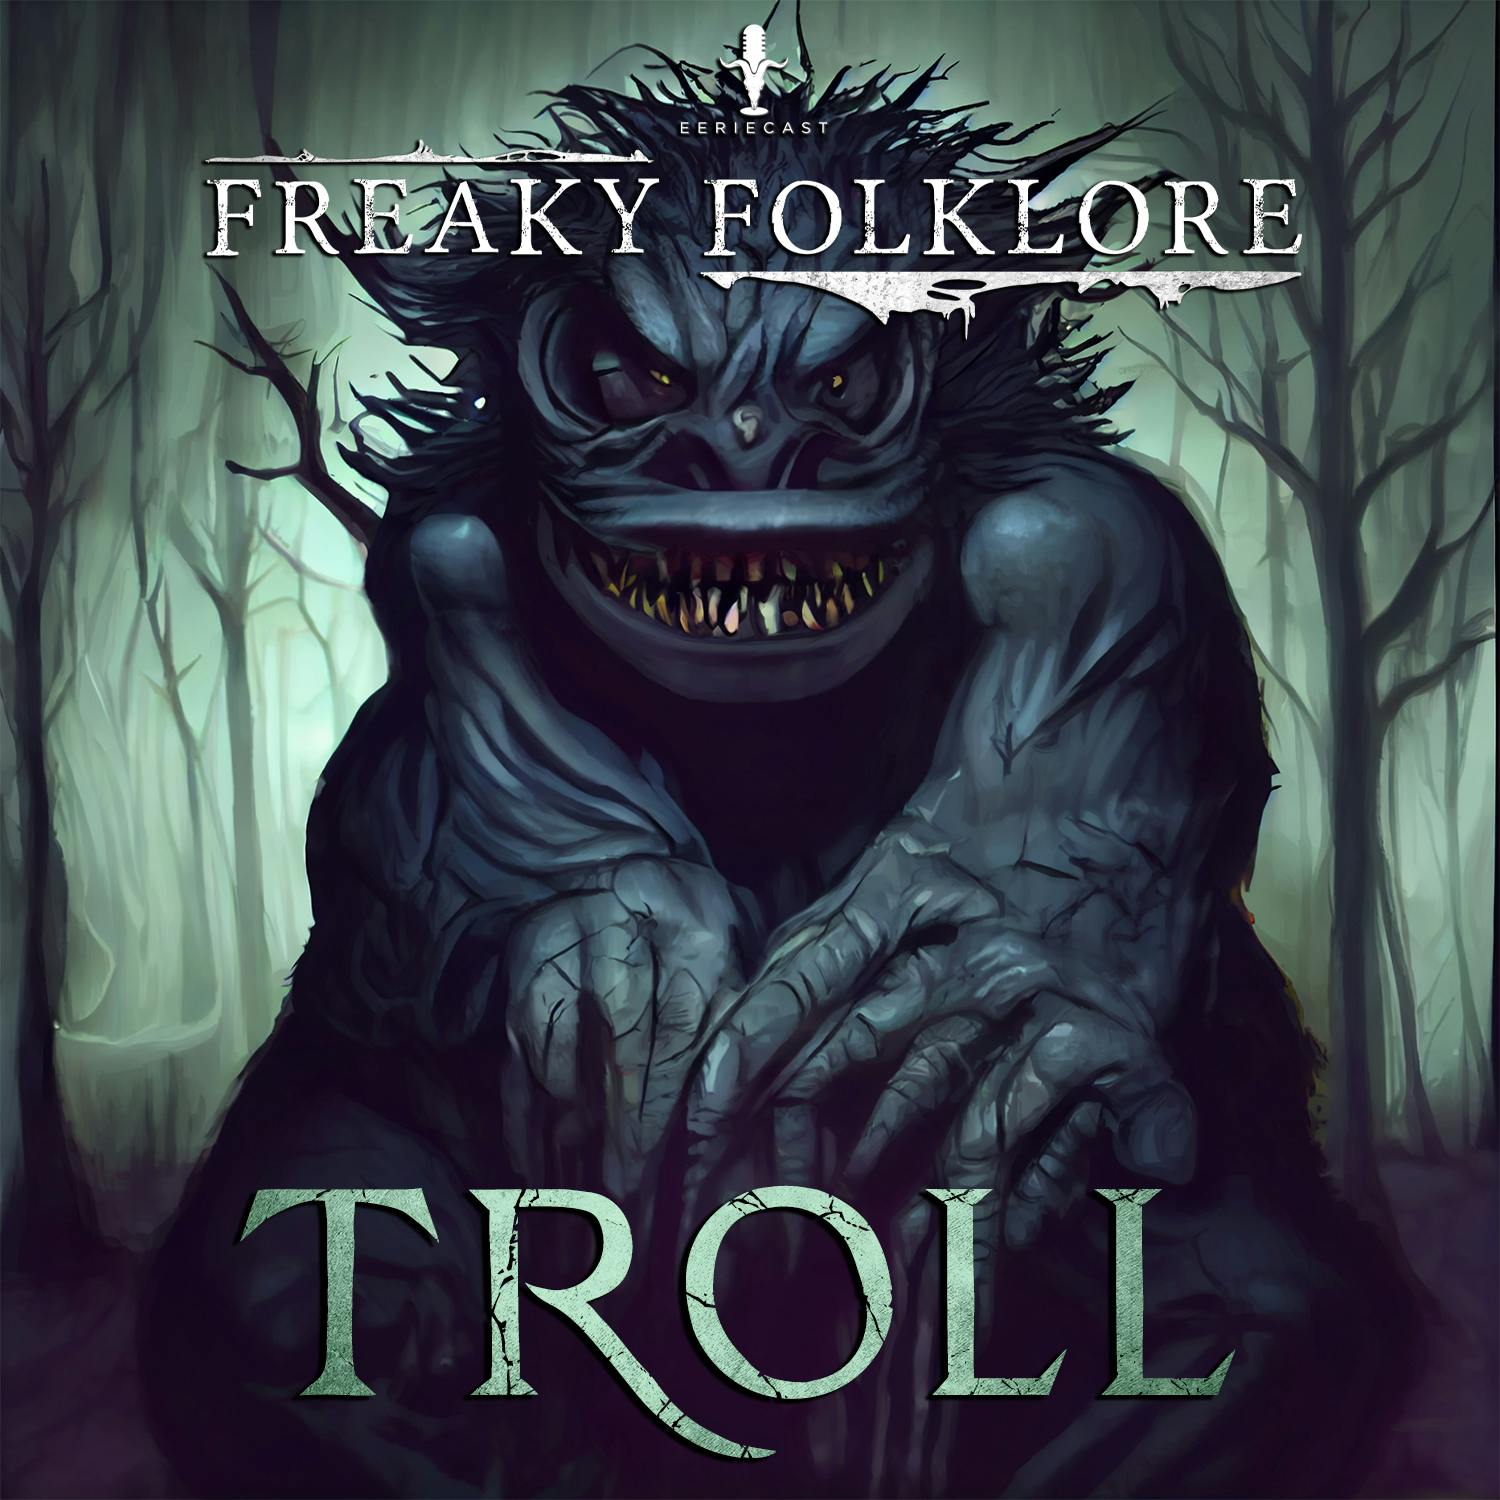 Trolls - Monstrous Man Hating Creatures